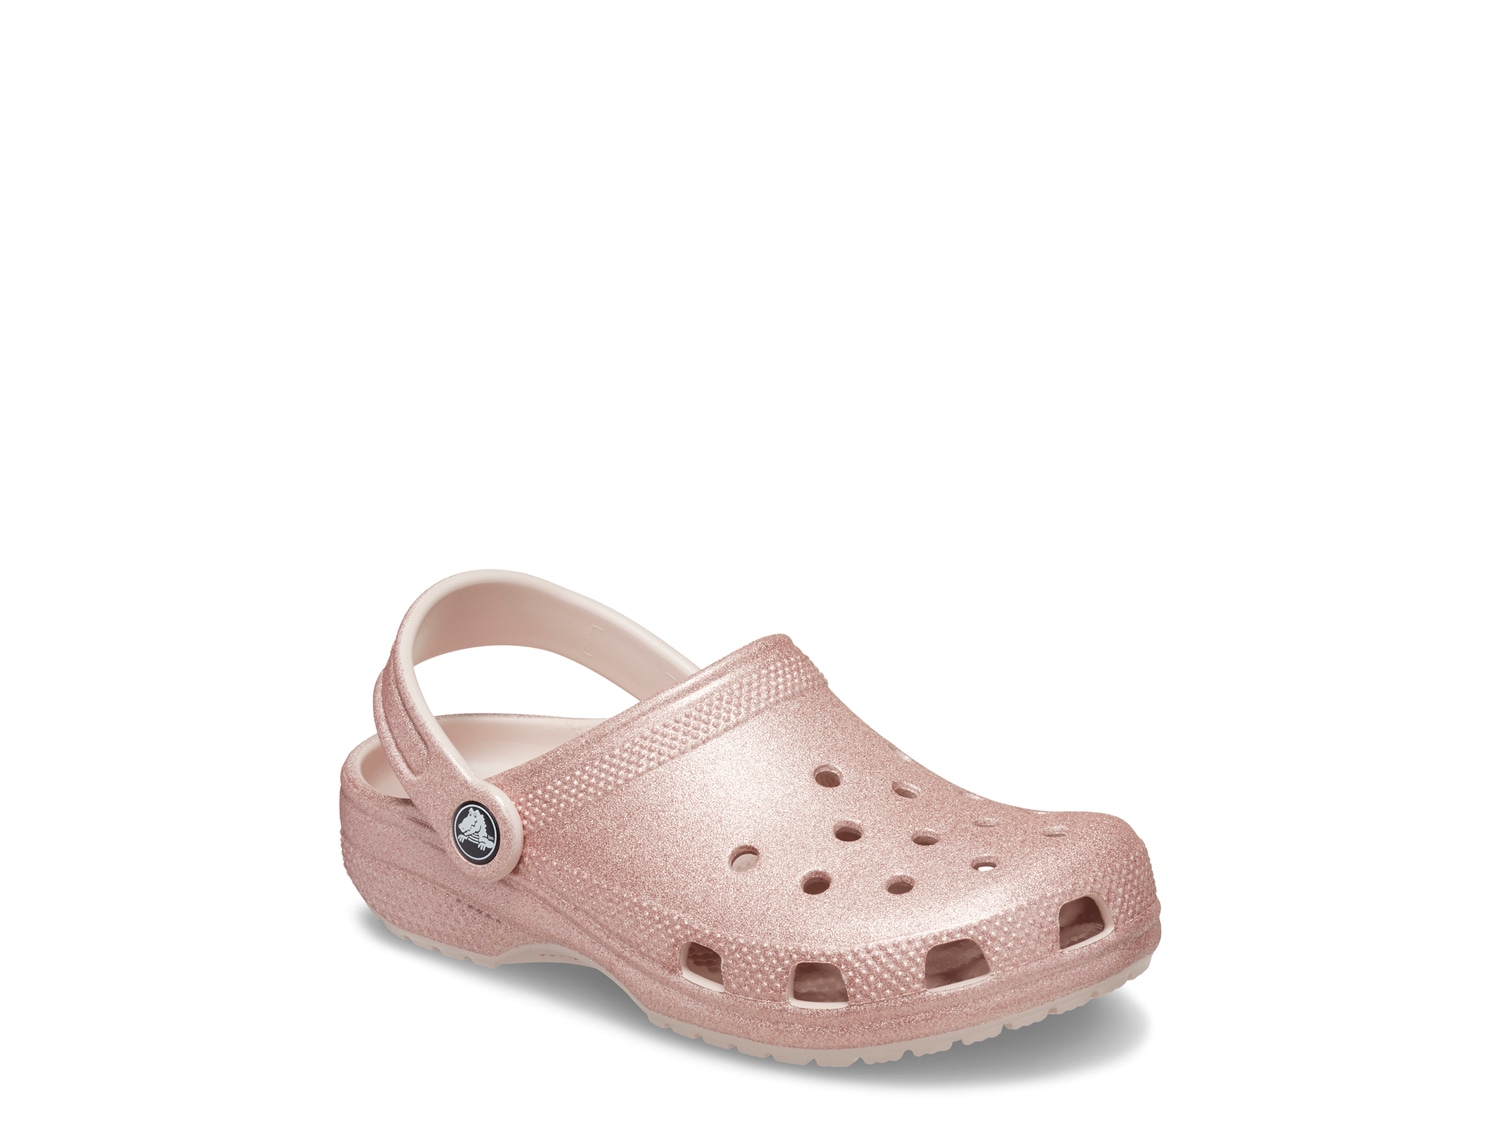 Crocs Classic Glitter Clog - Little Kid / Big Kid - Flamingo Pink